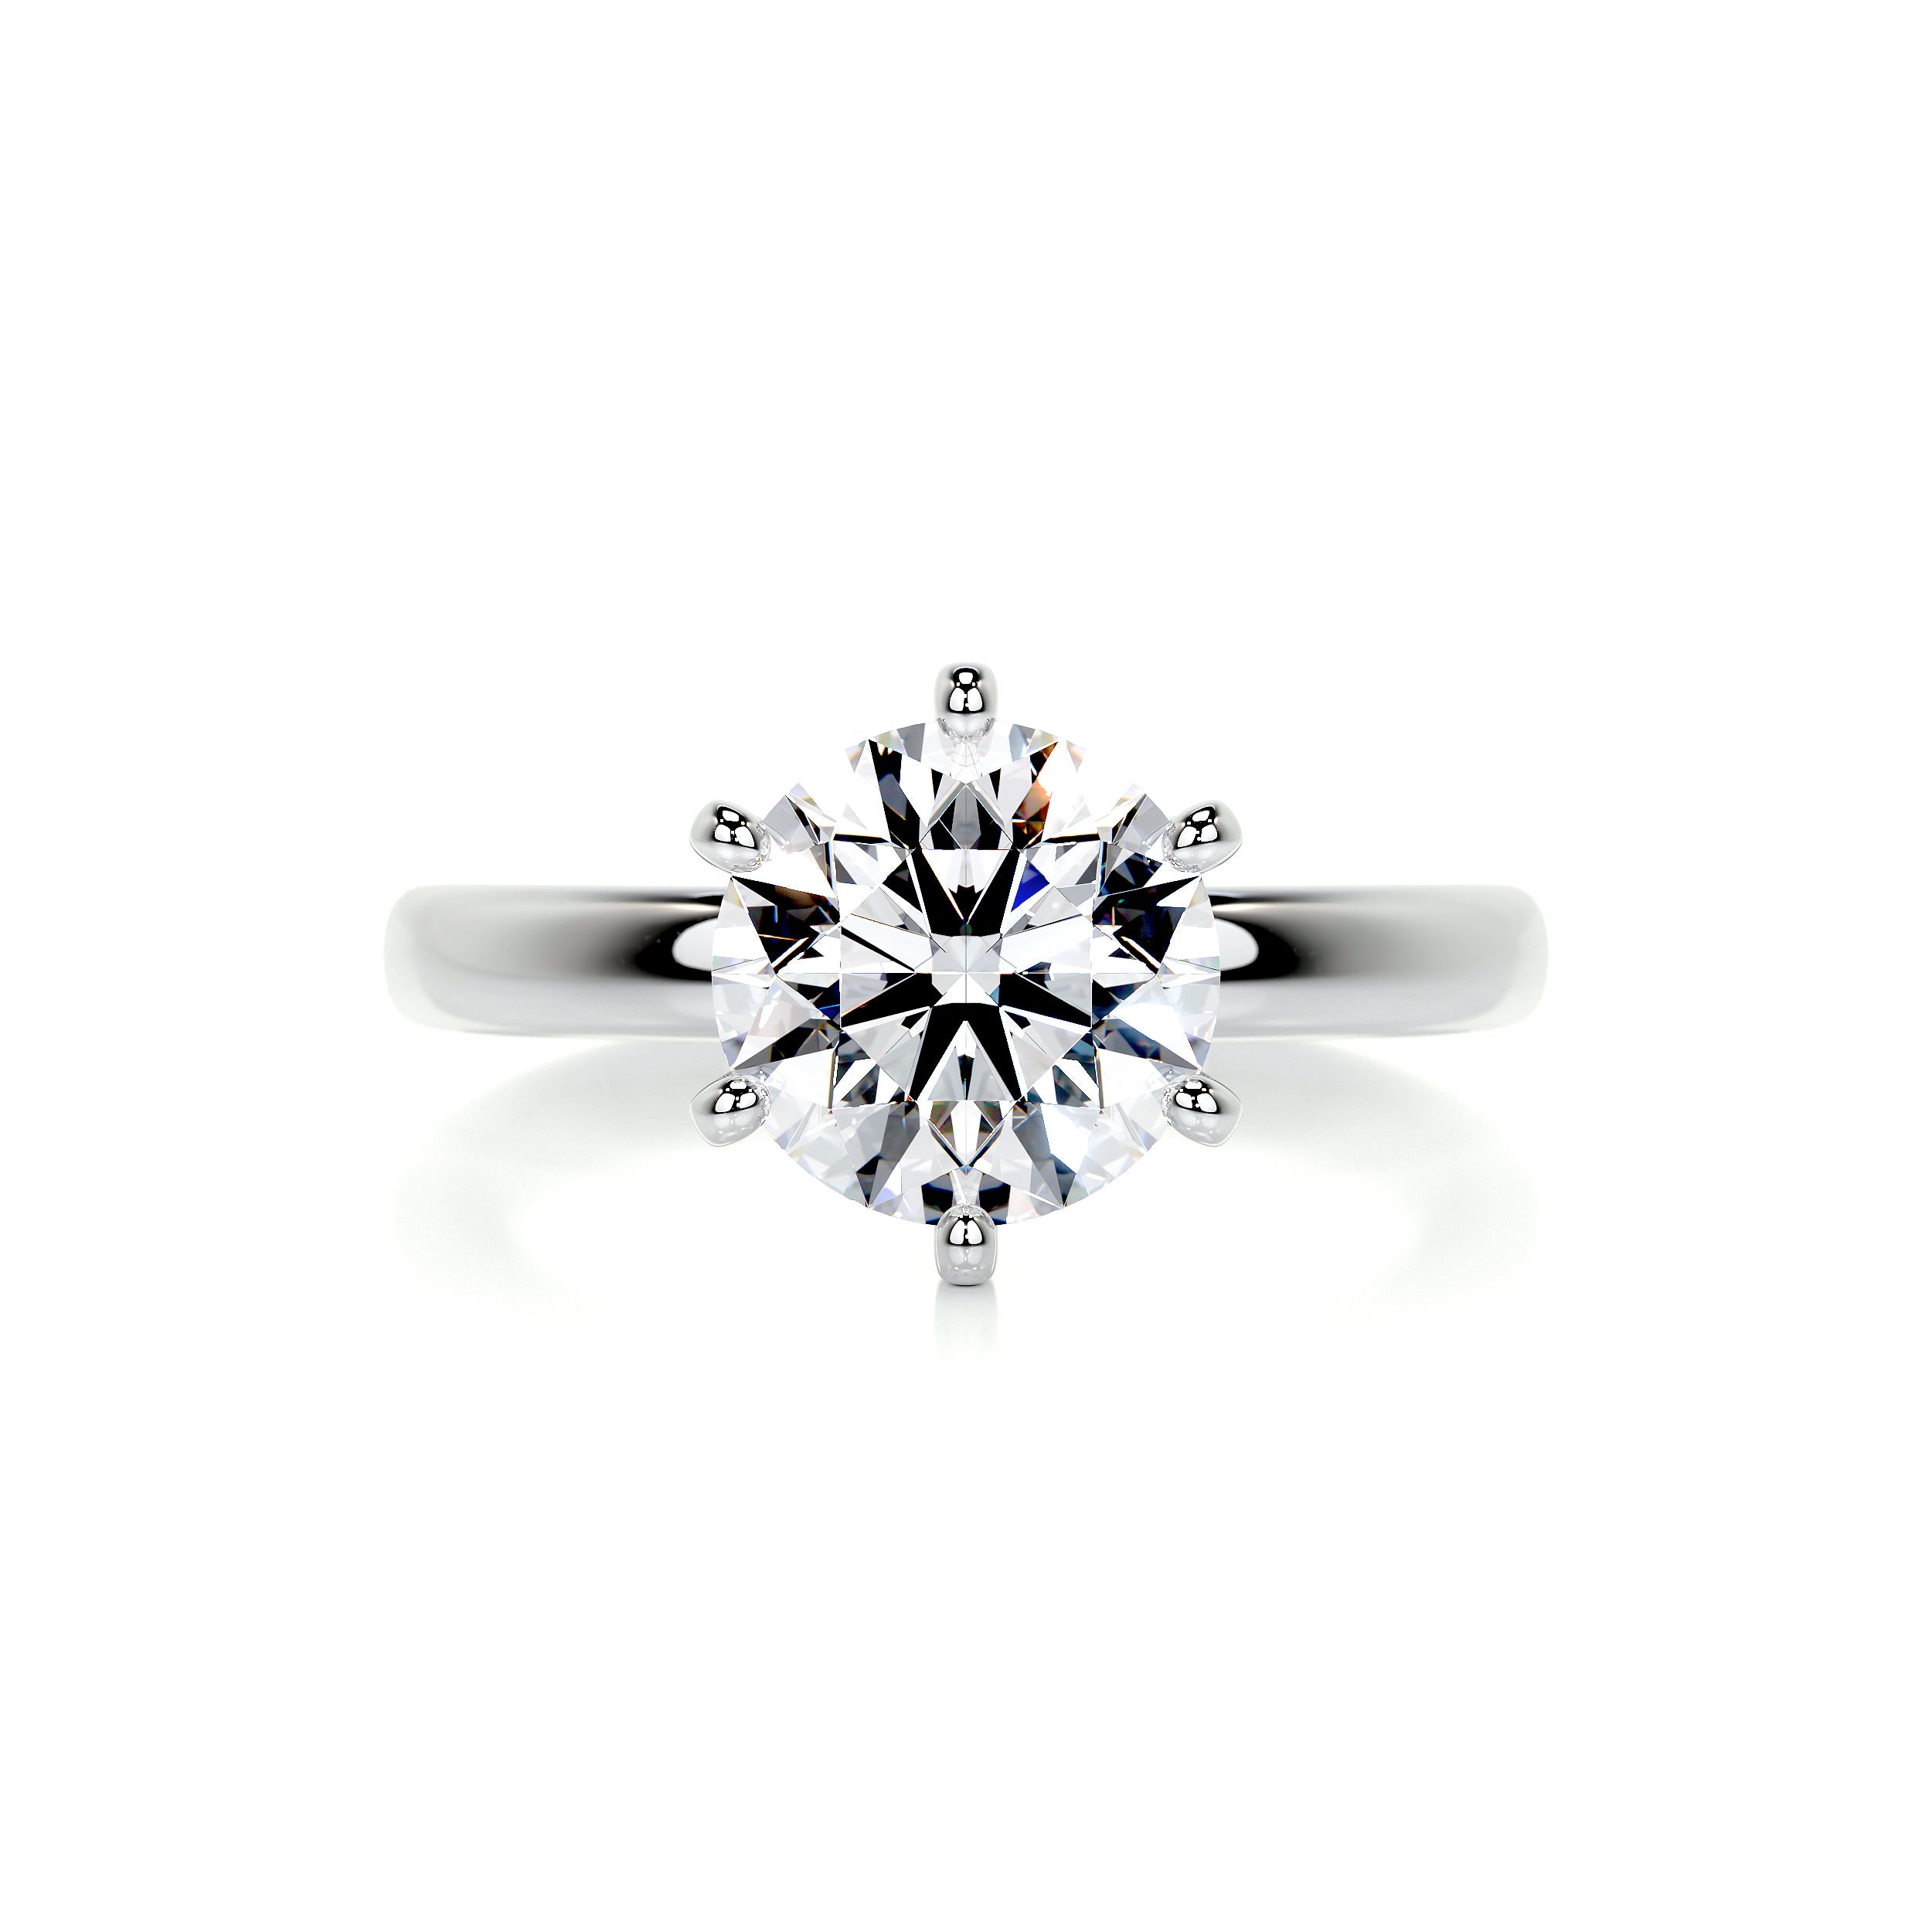 Jessica Diamond Engagement Ring   (2 Carat) -14K White Gold